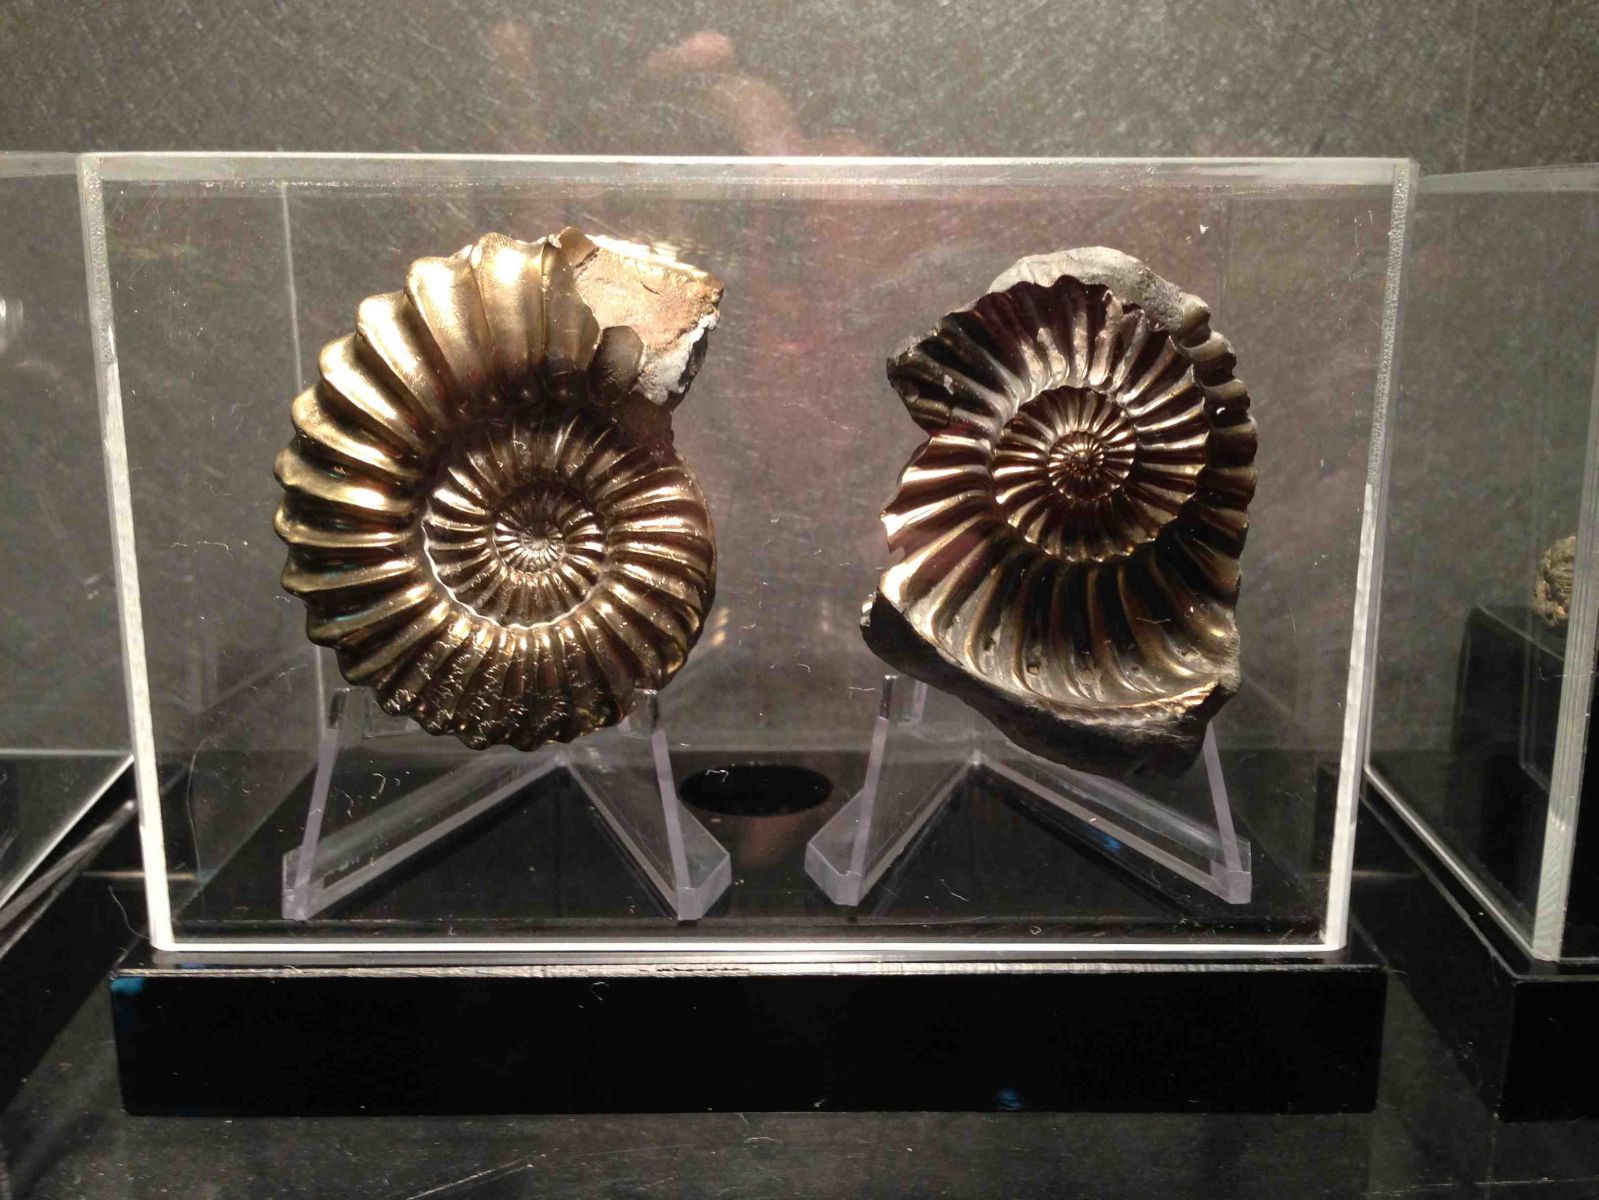 Pleuroceras ammonite